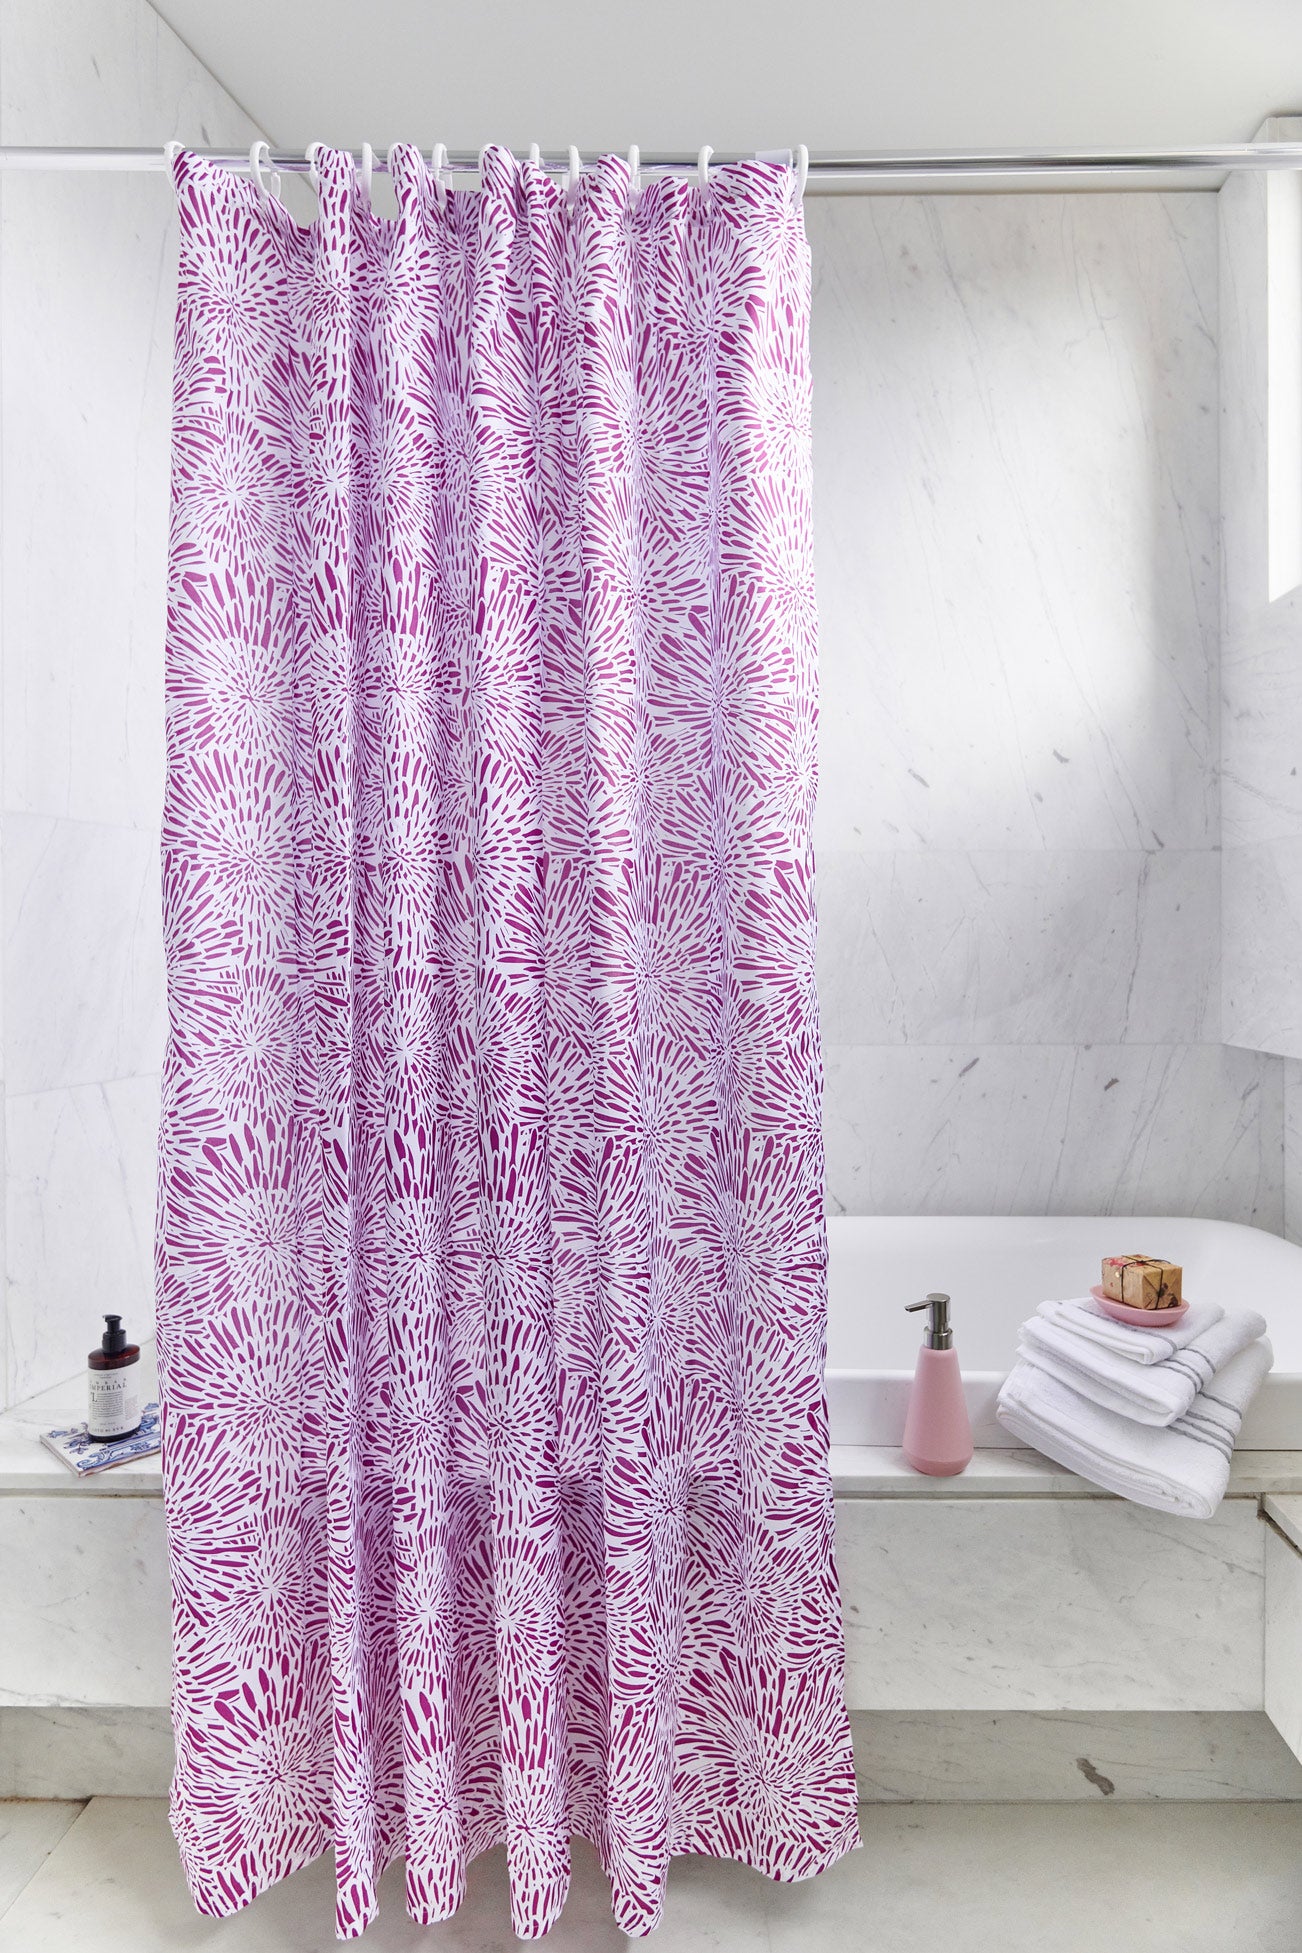 Dandelion Shower Curtain